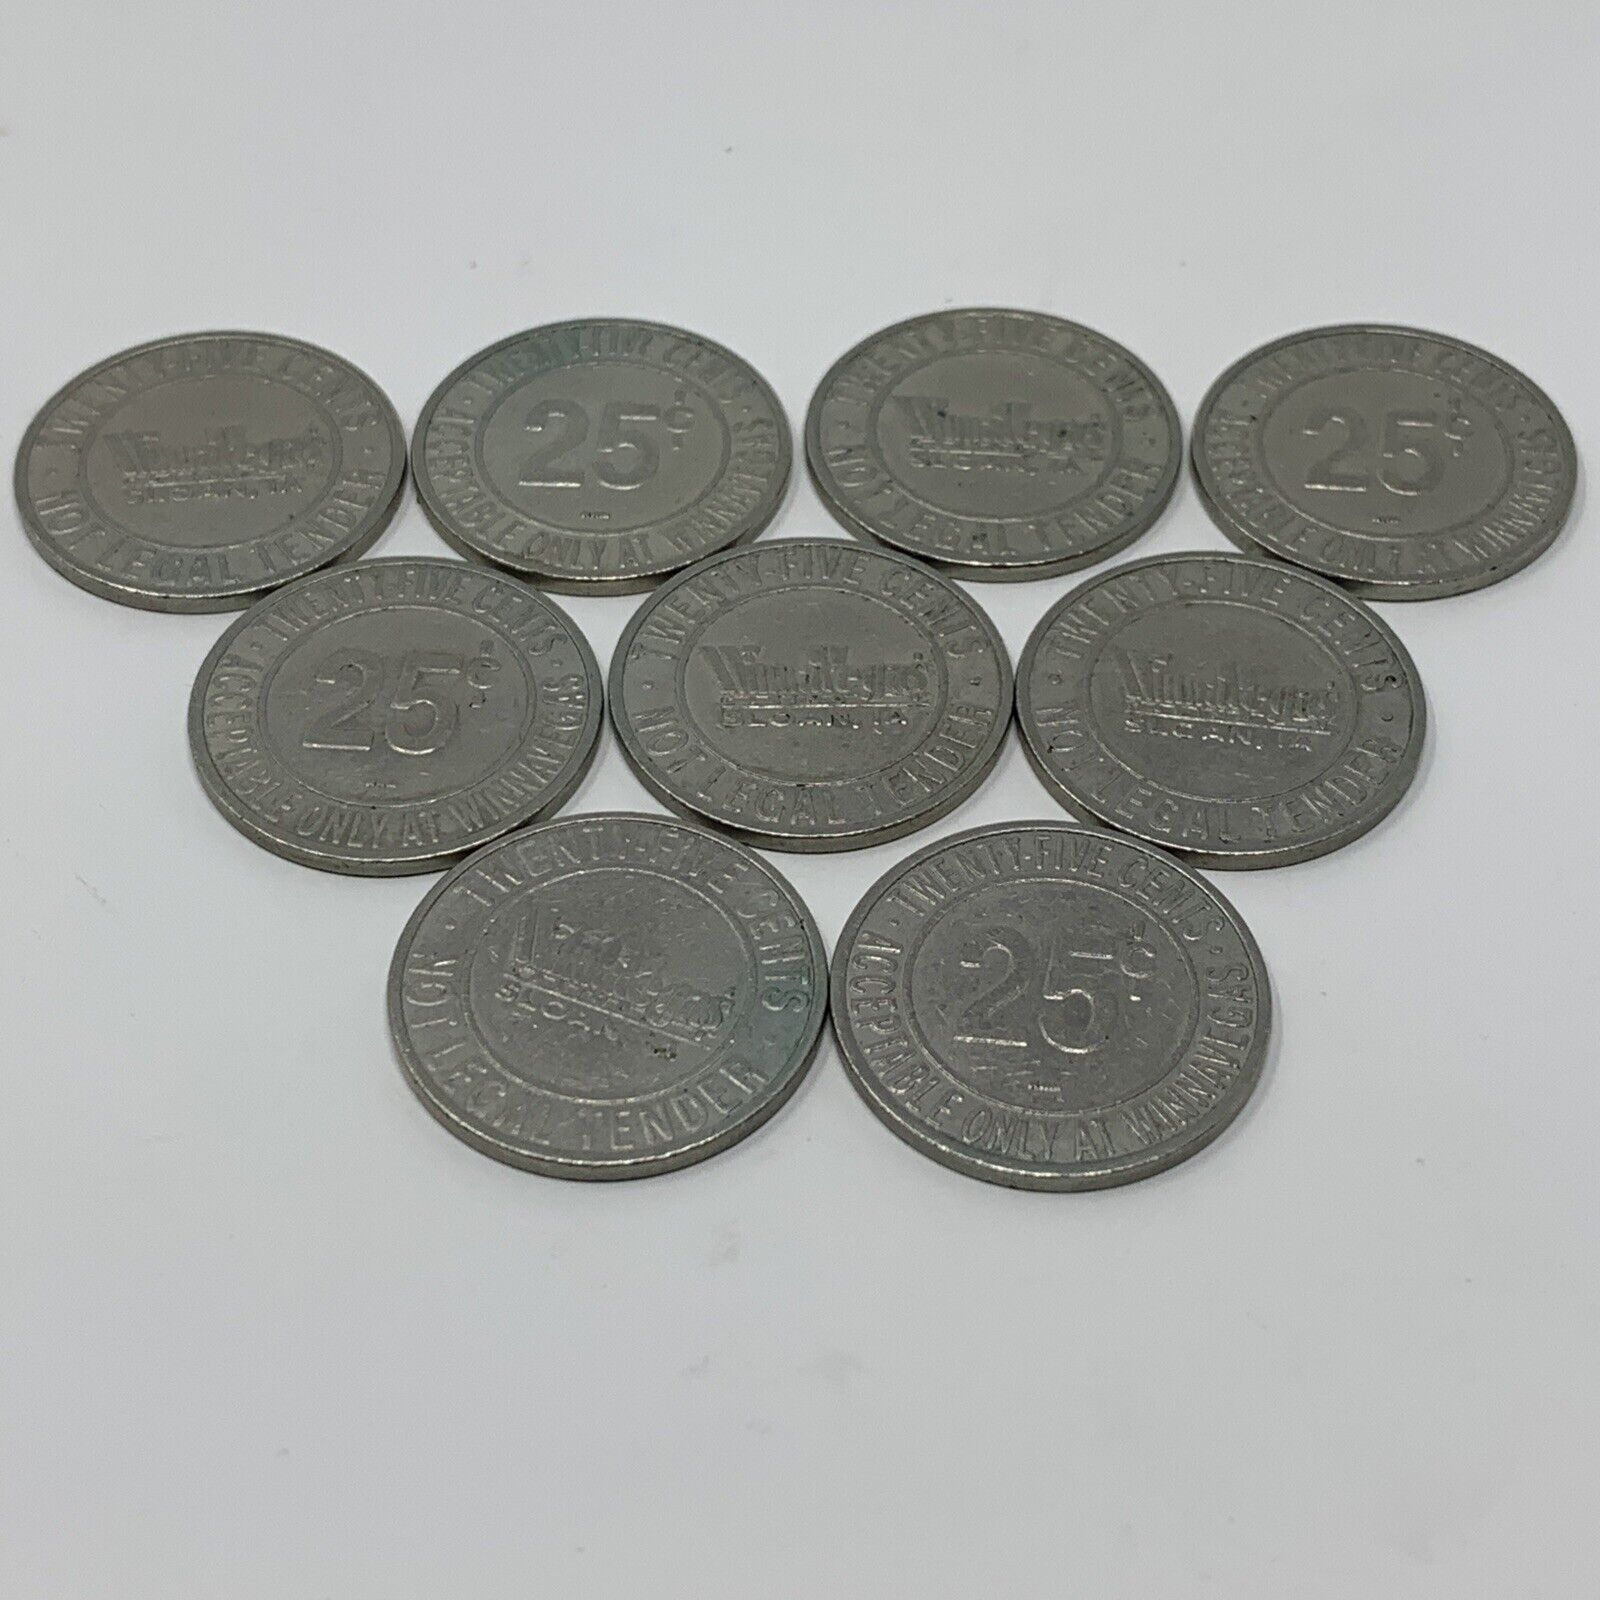 Lot of 9 WINNEVEGAS CASINO Sloan, Iowa $0.25 coins